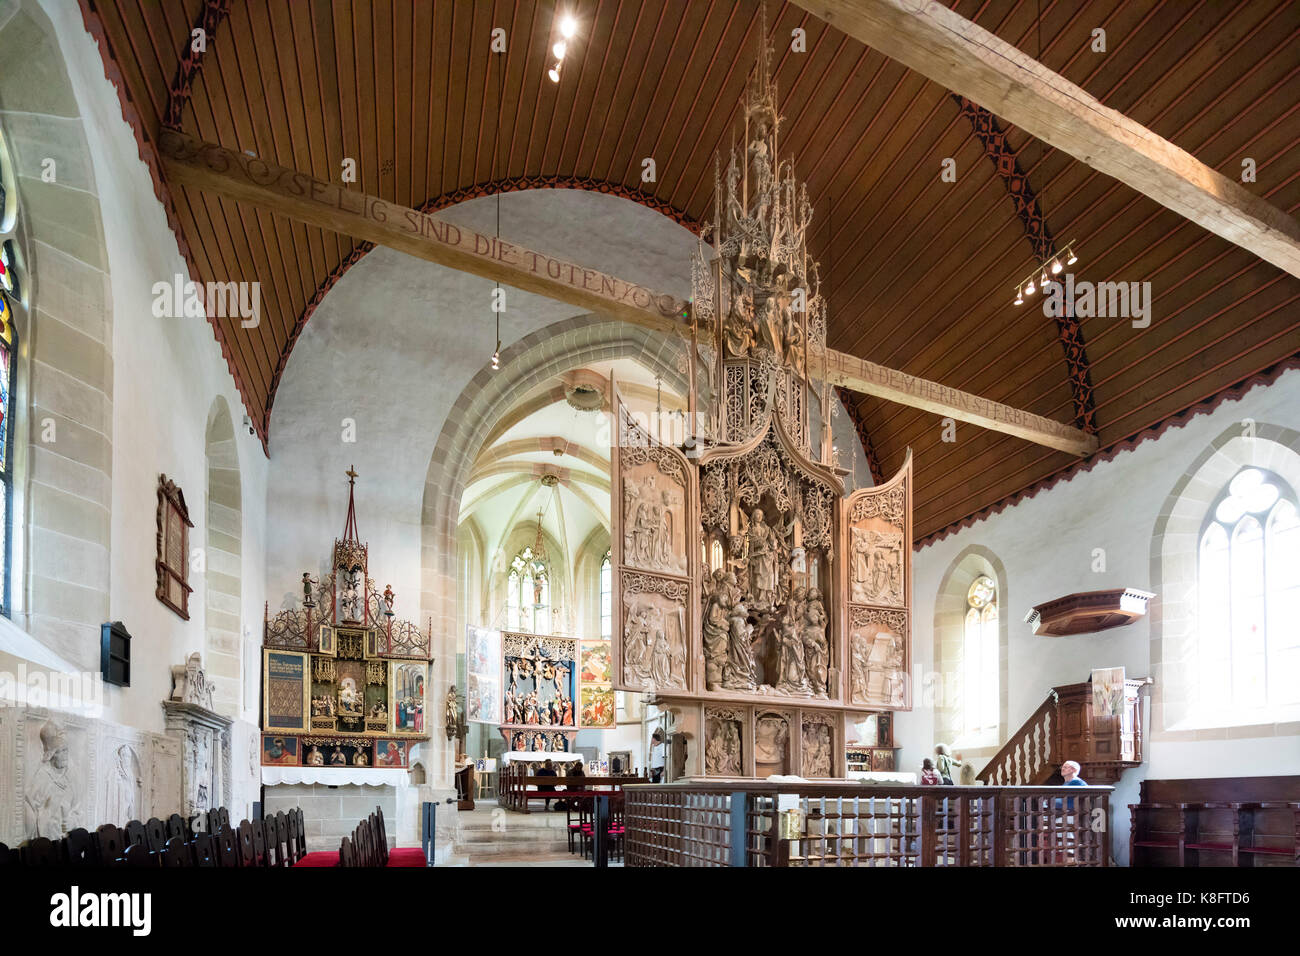 Il Marien-altare di Tilman Riemenschneider, c. 1505-1508, Herrgottskirche (Chiesa di Nostra Signora), Creglingen, Franconia, Baviera, Germania Foto Stock